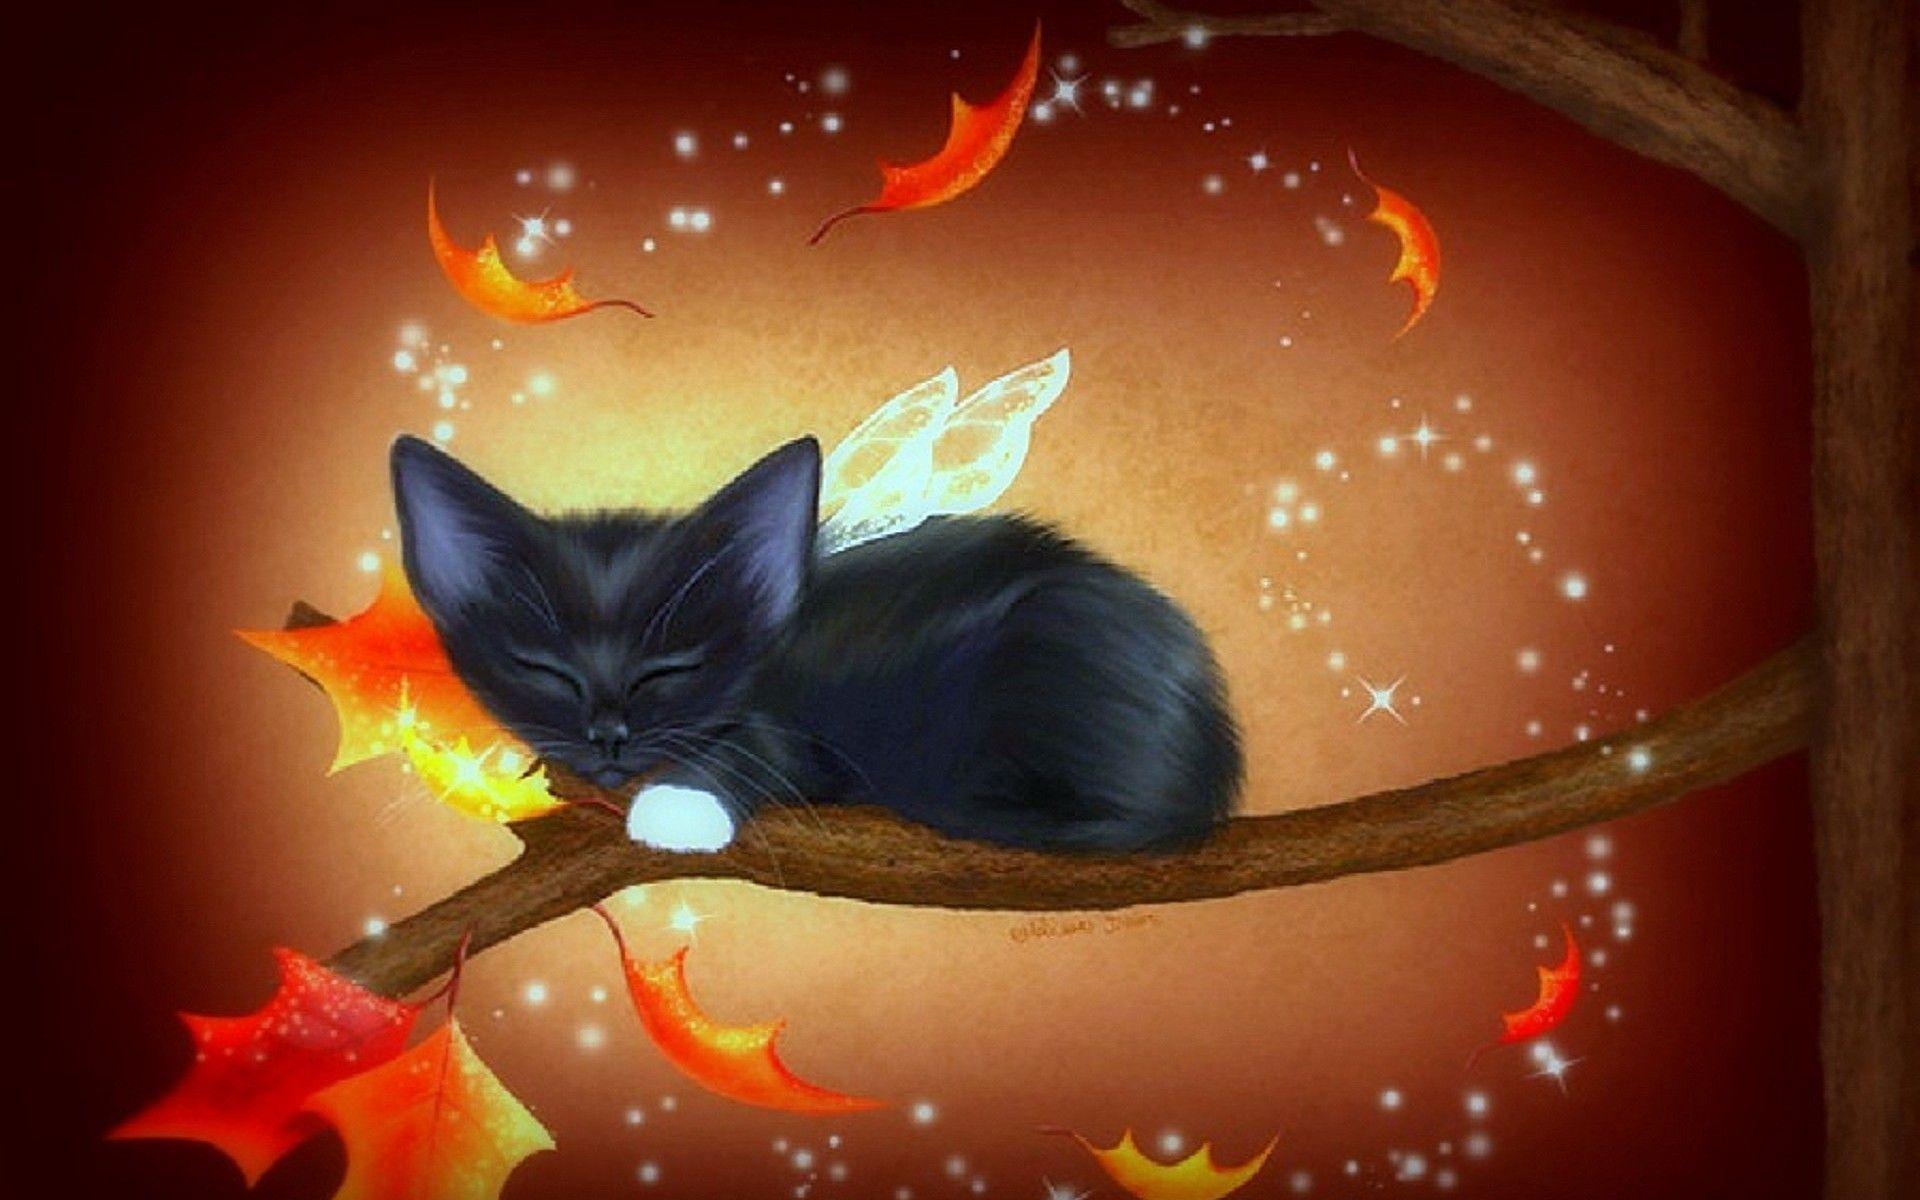 Halloween Black Cats Wallpapers - Wallpaper Cave